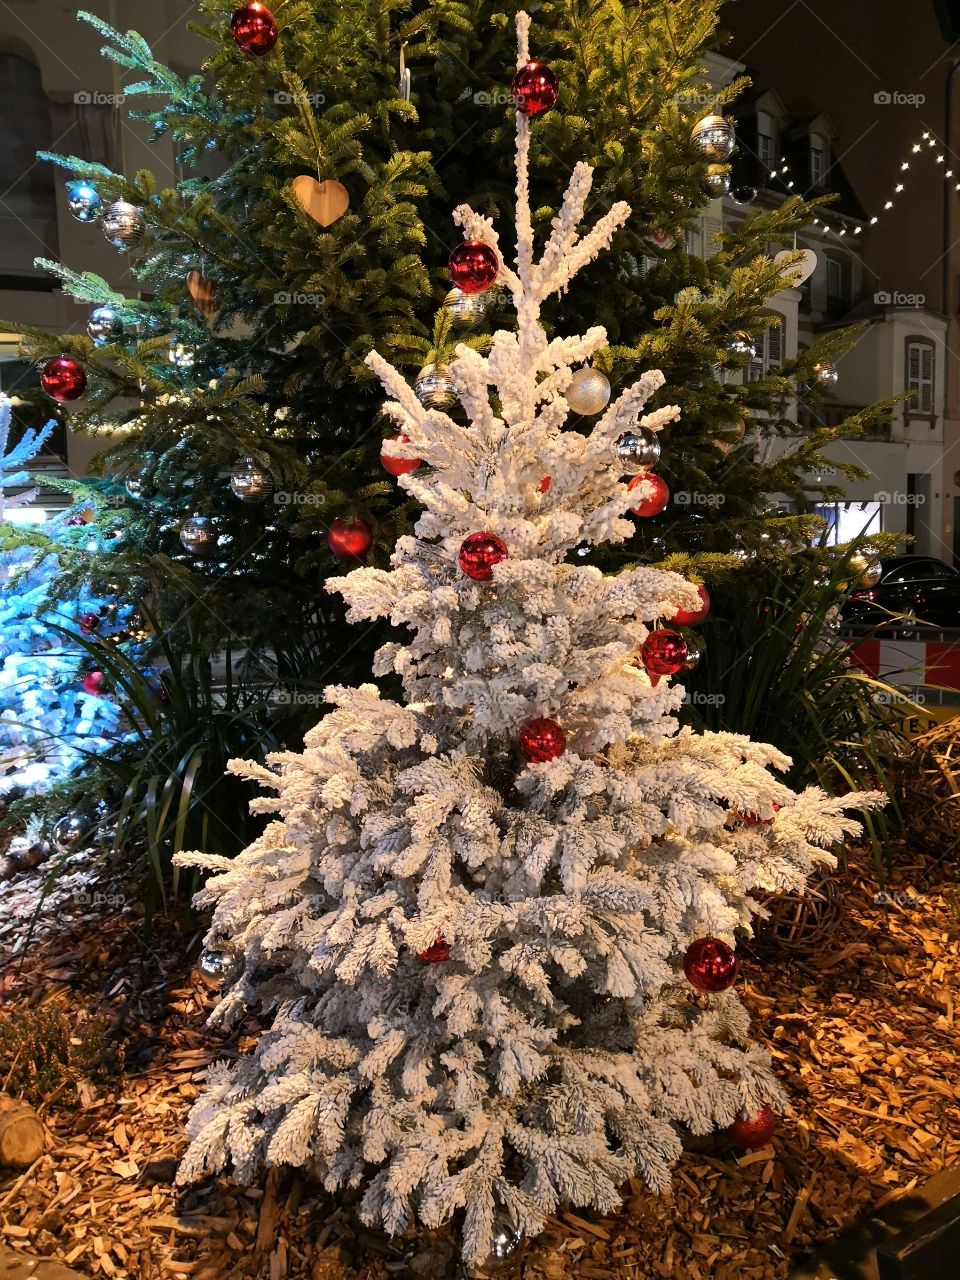 Tree, Christmas Decorations